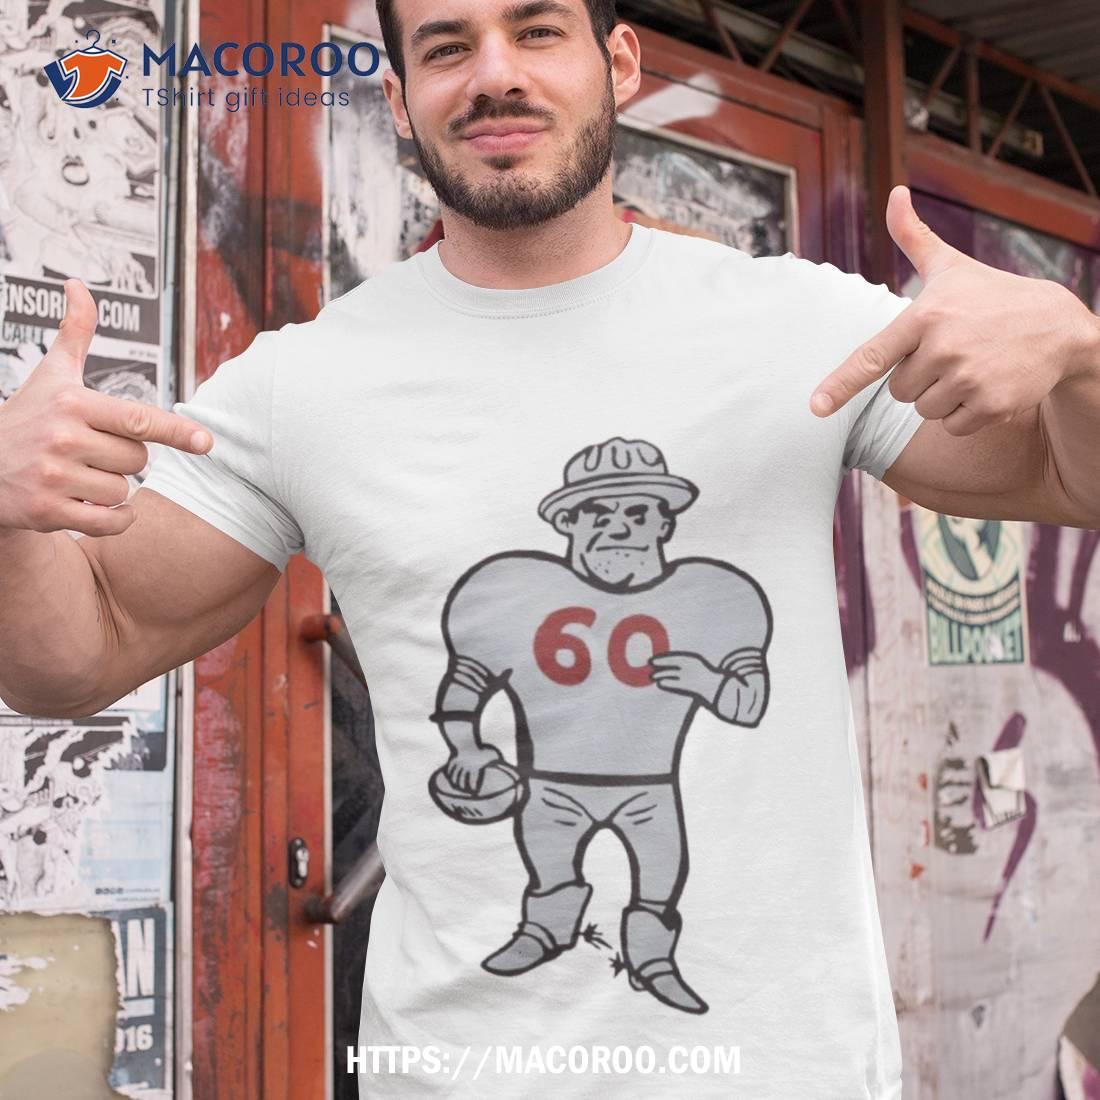 Houston Oilers Vintage Art Long Sleeve T-Shirt